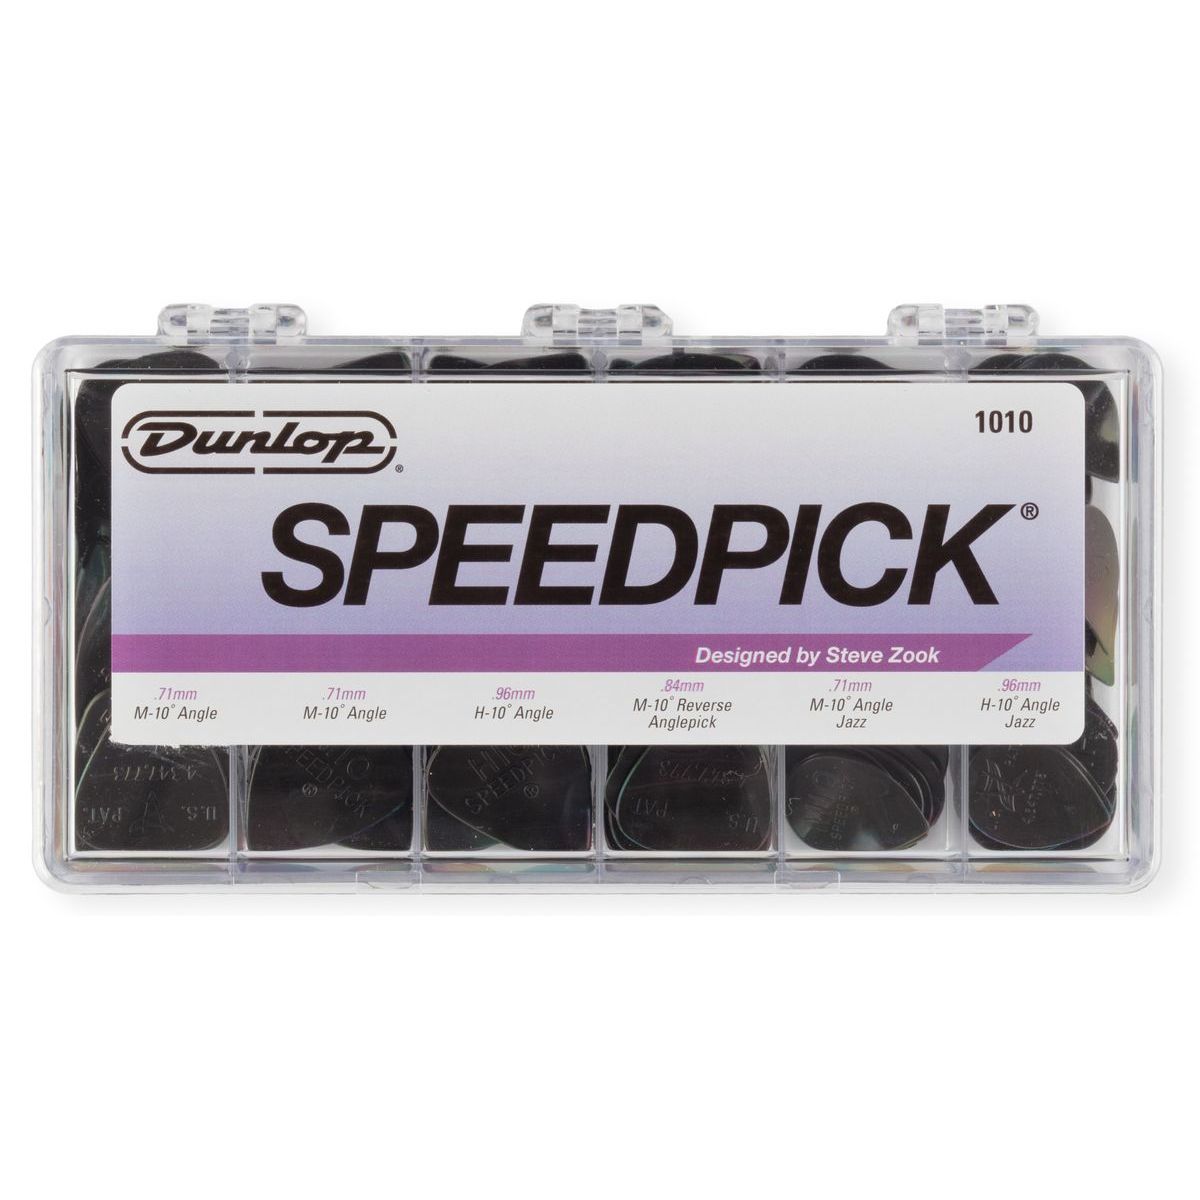 Медиаторы Dunlop 1010 Speedpick Display (144 шт) медиаторы dunlop 4700 nylon jazz display